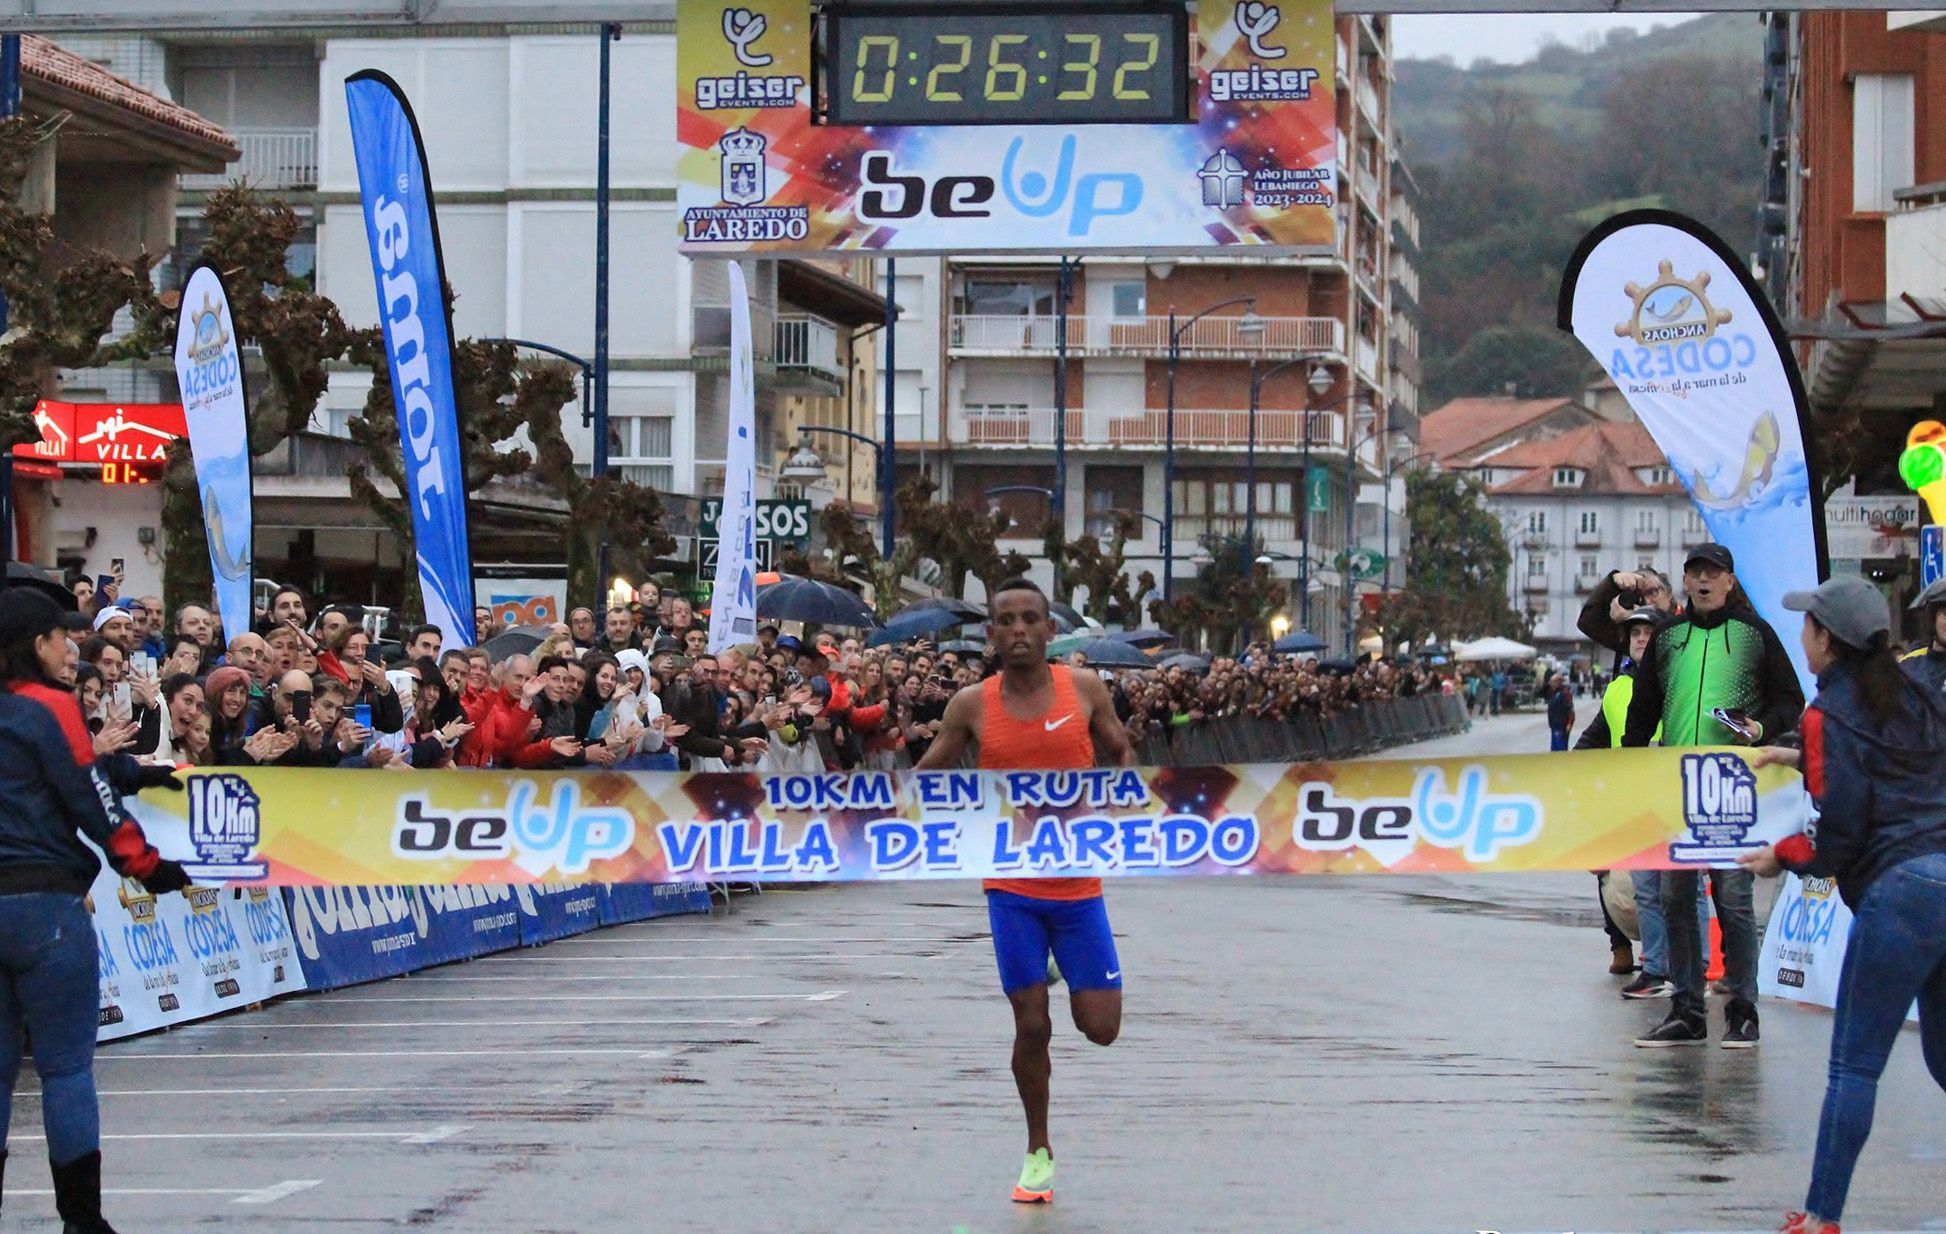 Berihu Aregawi runs 26:33 for 10km in Laredo